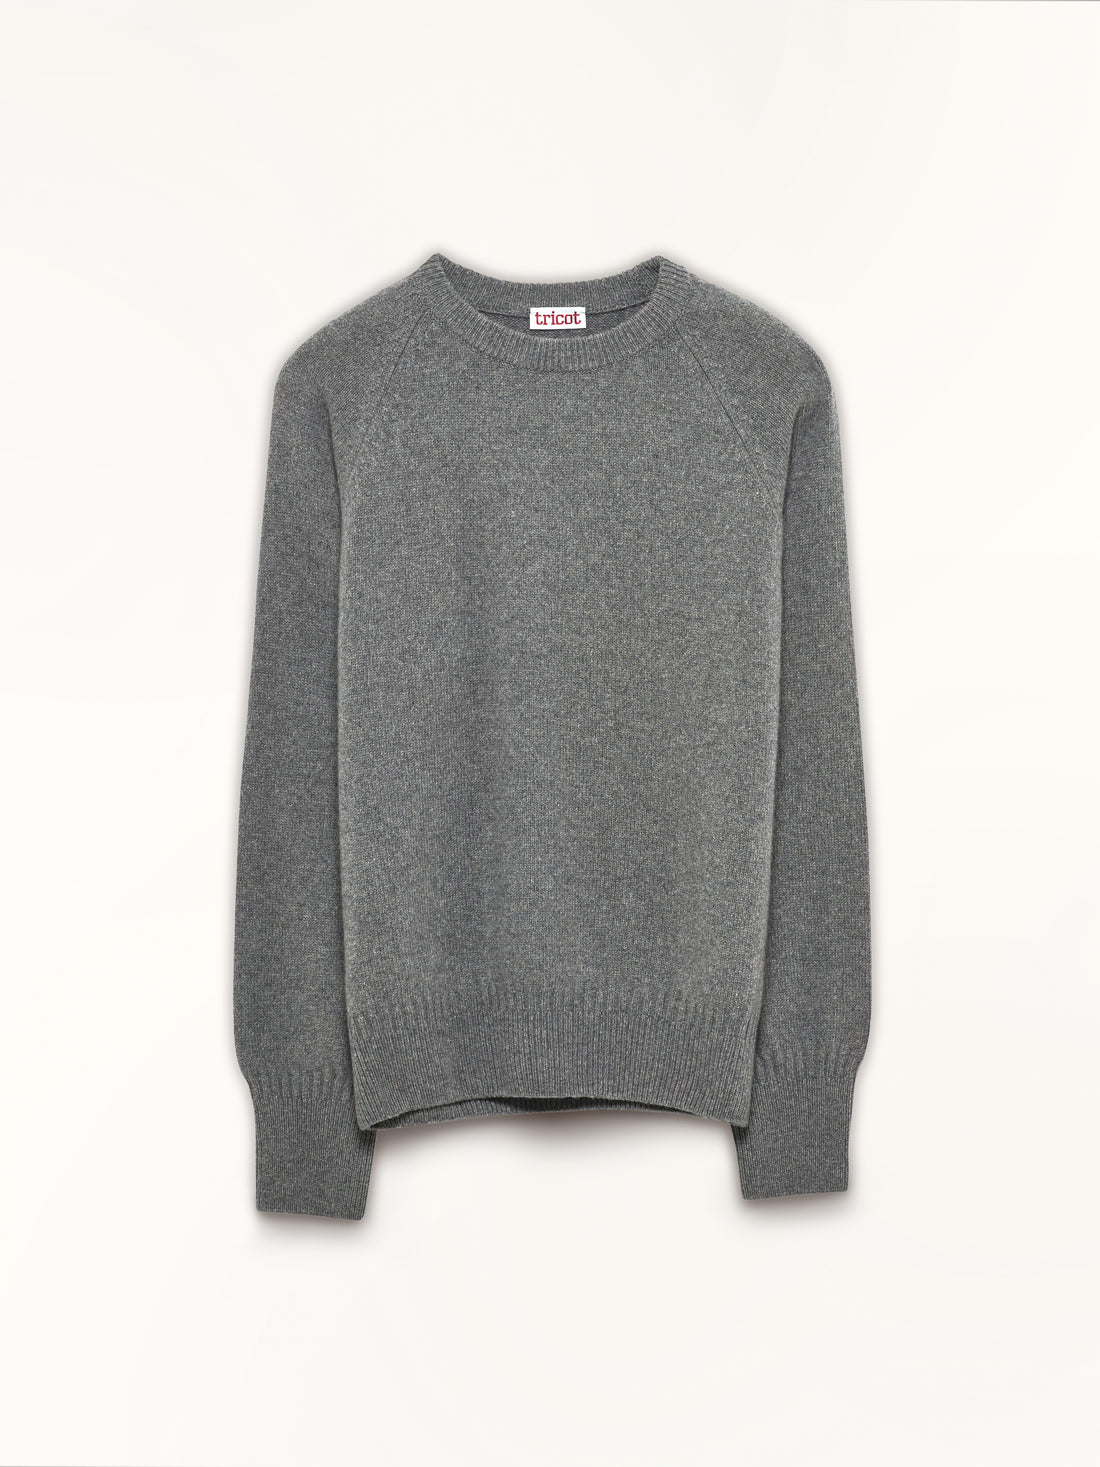 Men's crewneck cashmere sweater in Gray